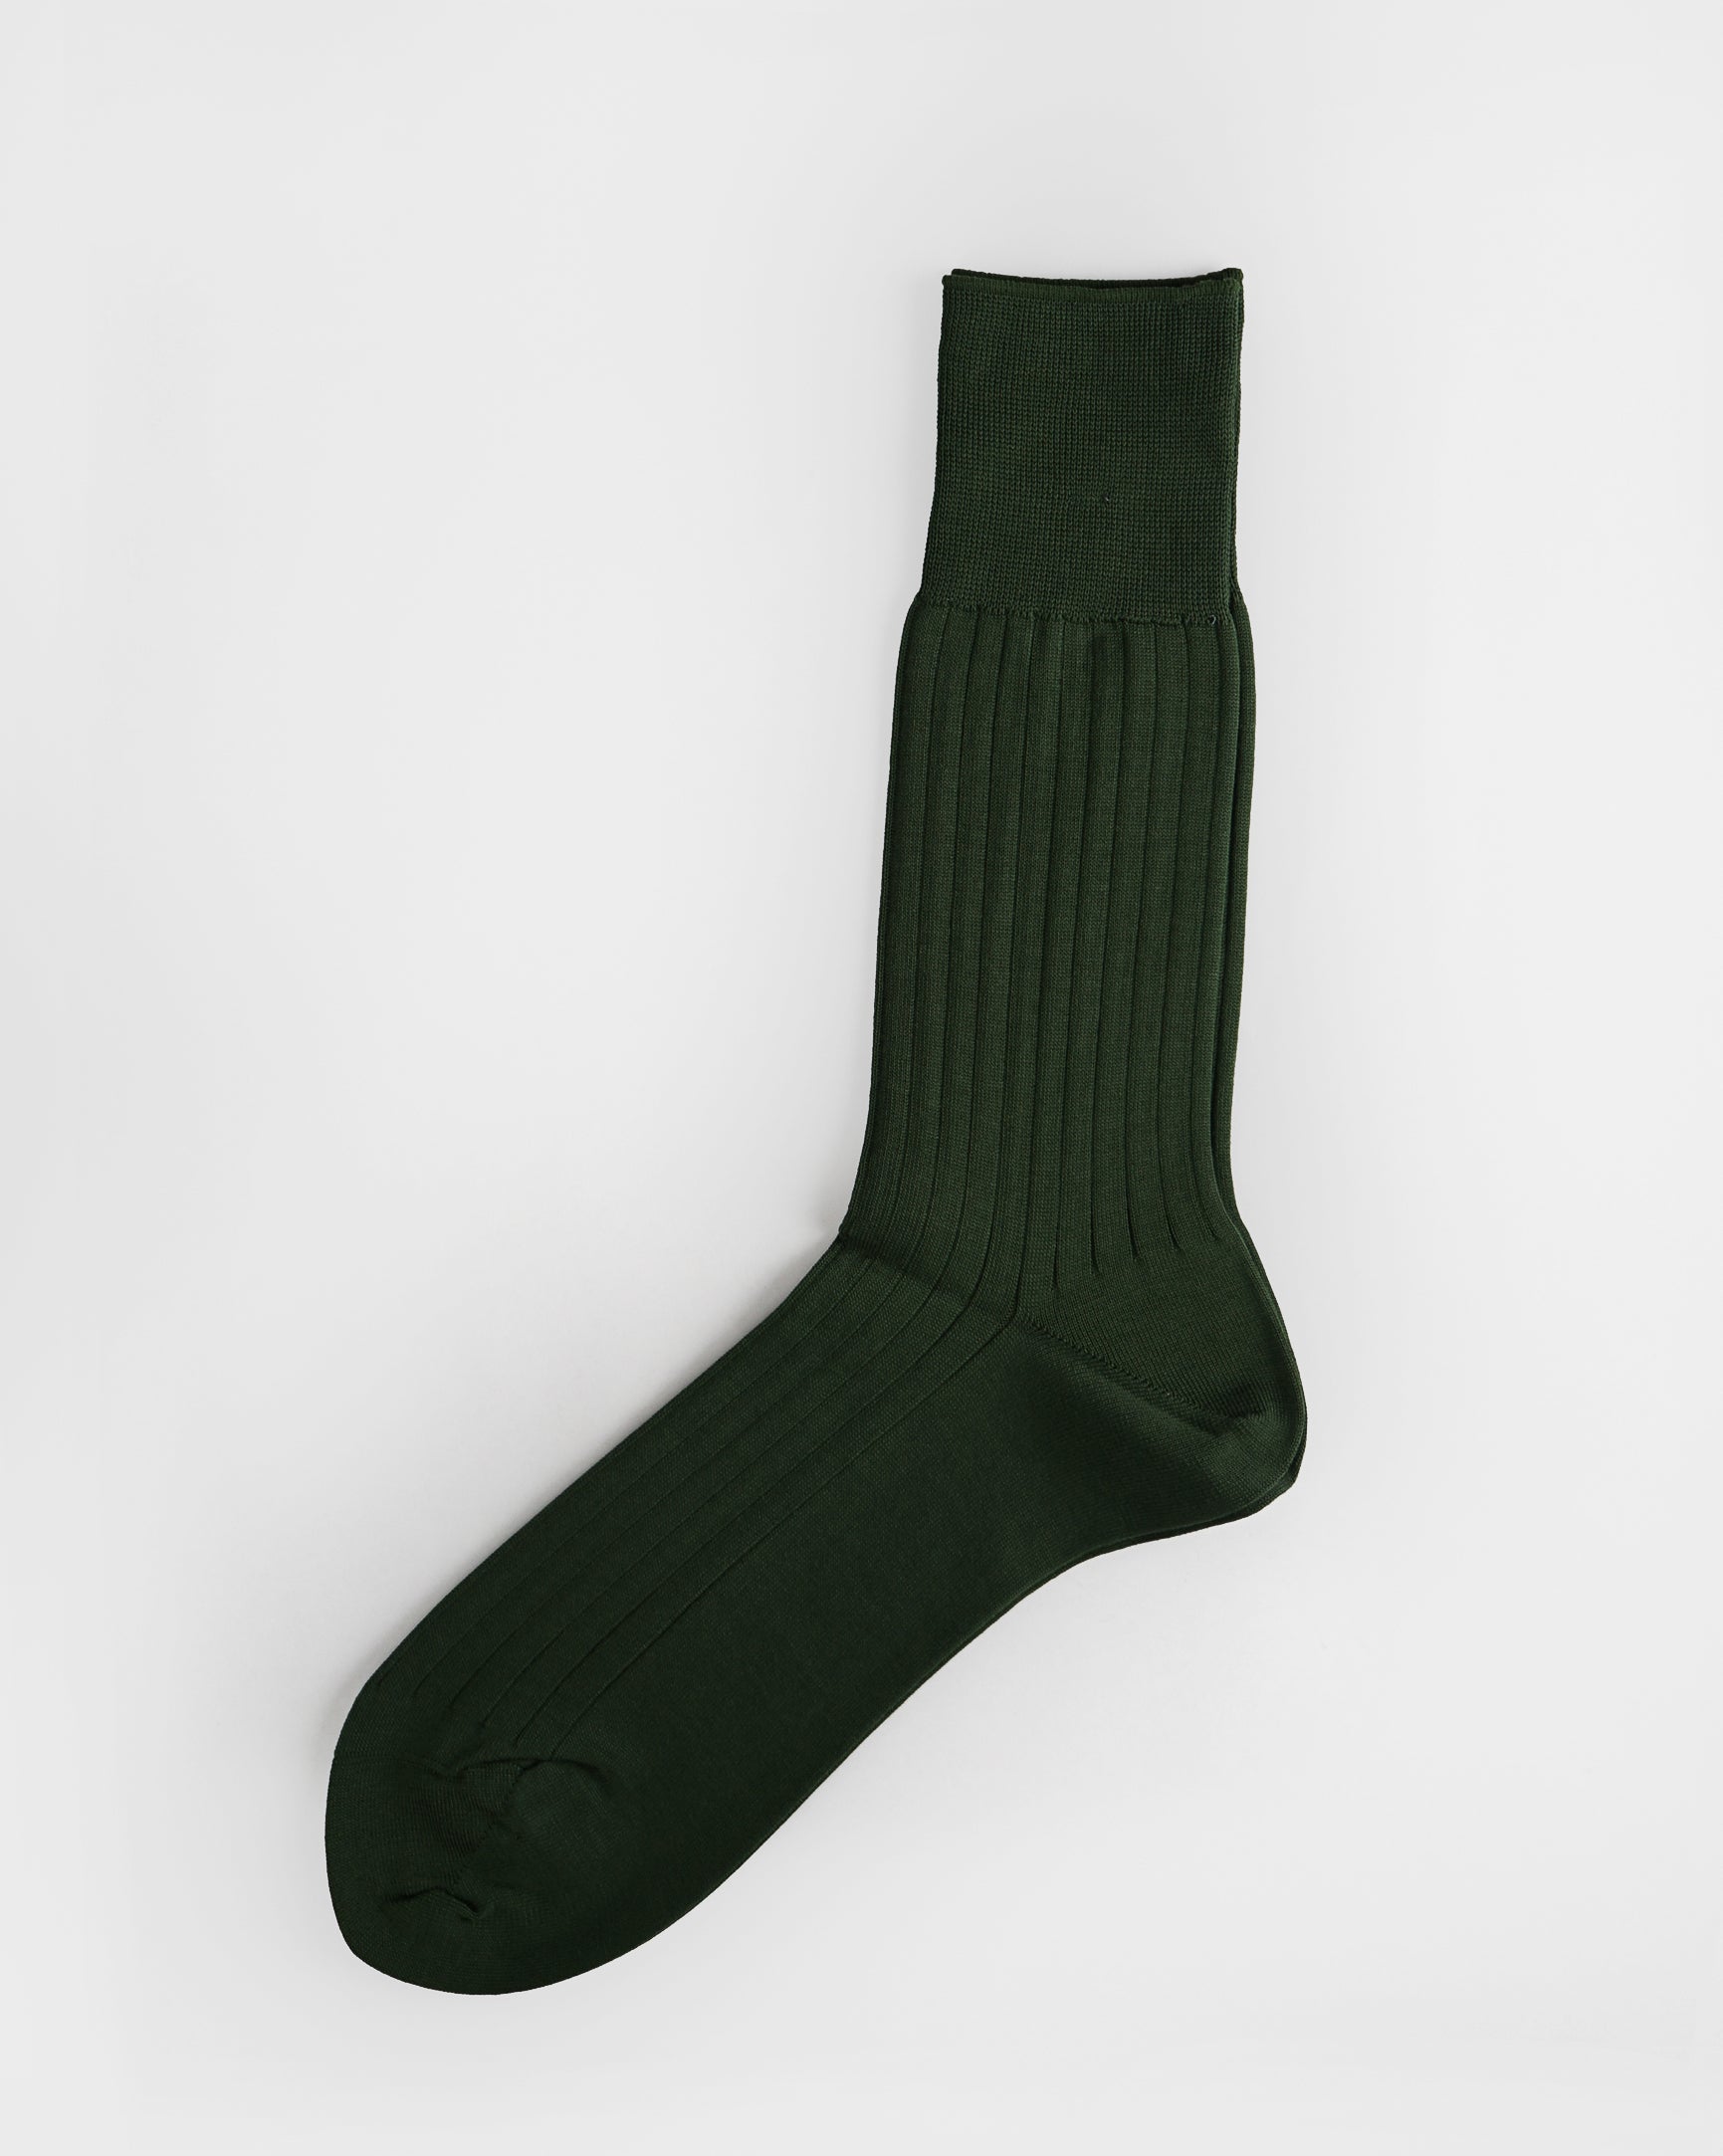 dress socks mens